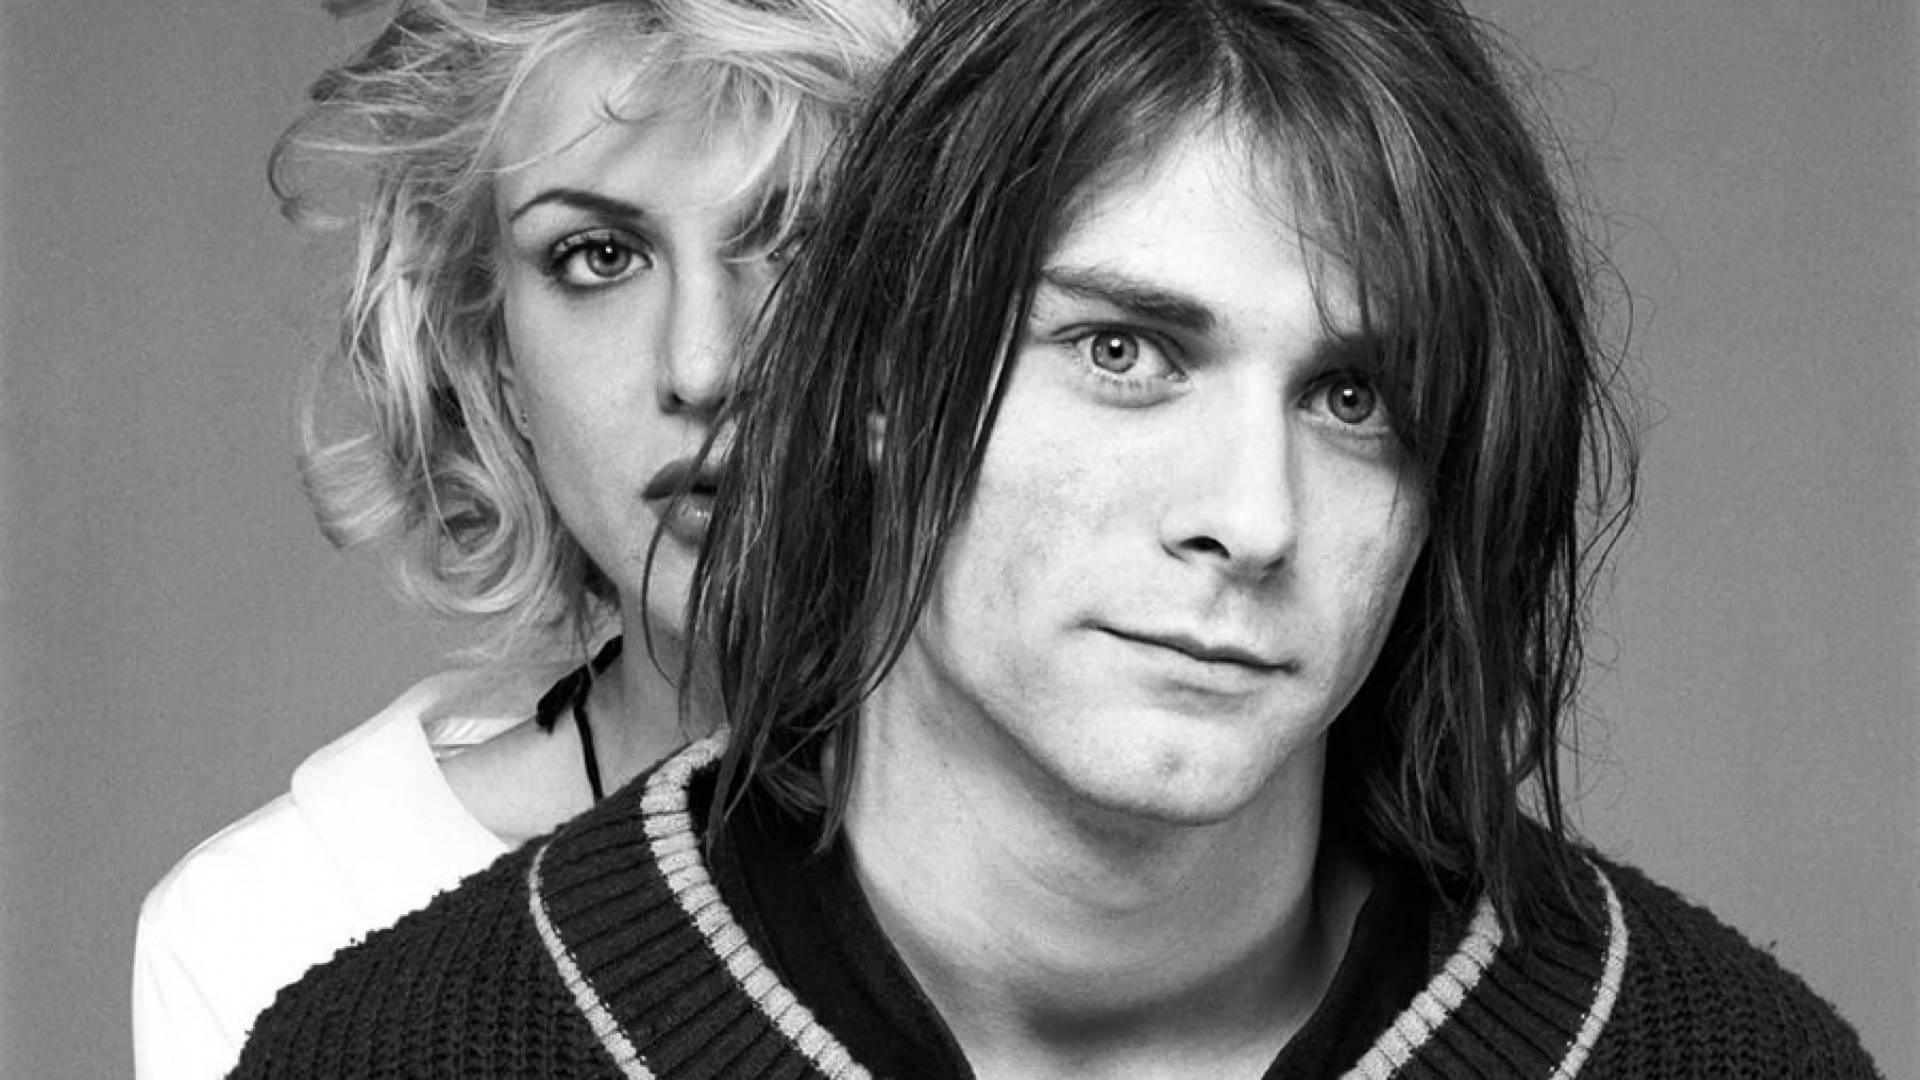 Kurt Cobain With Courtney Love